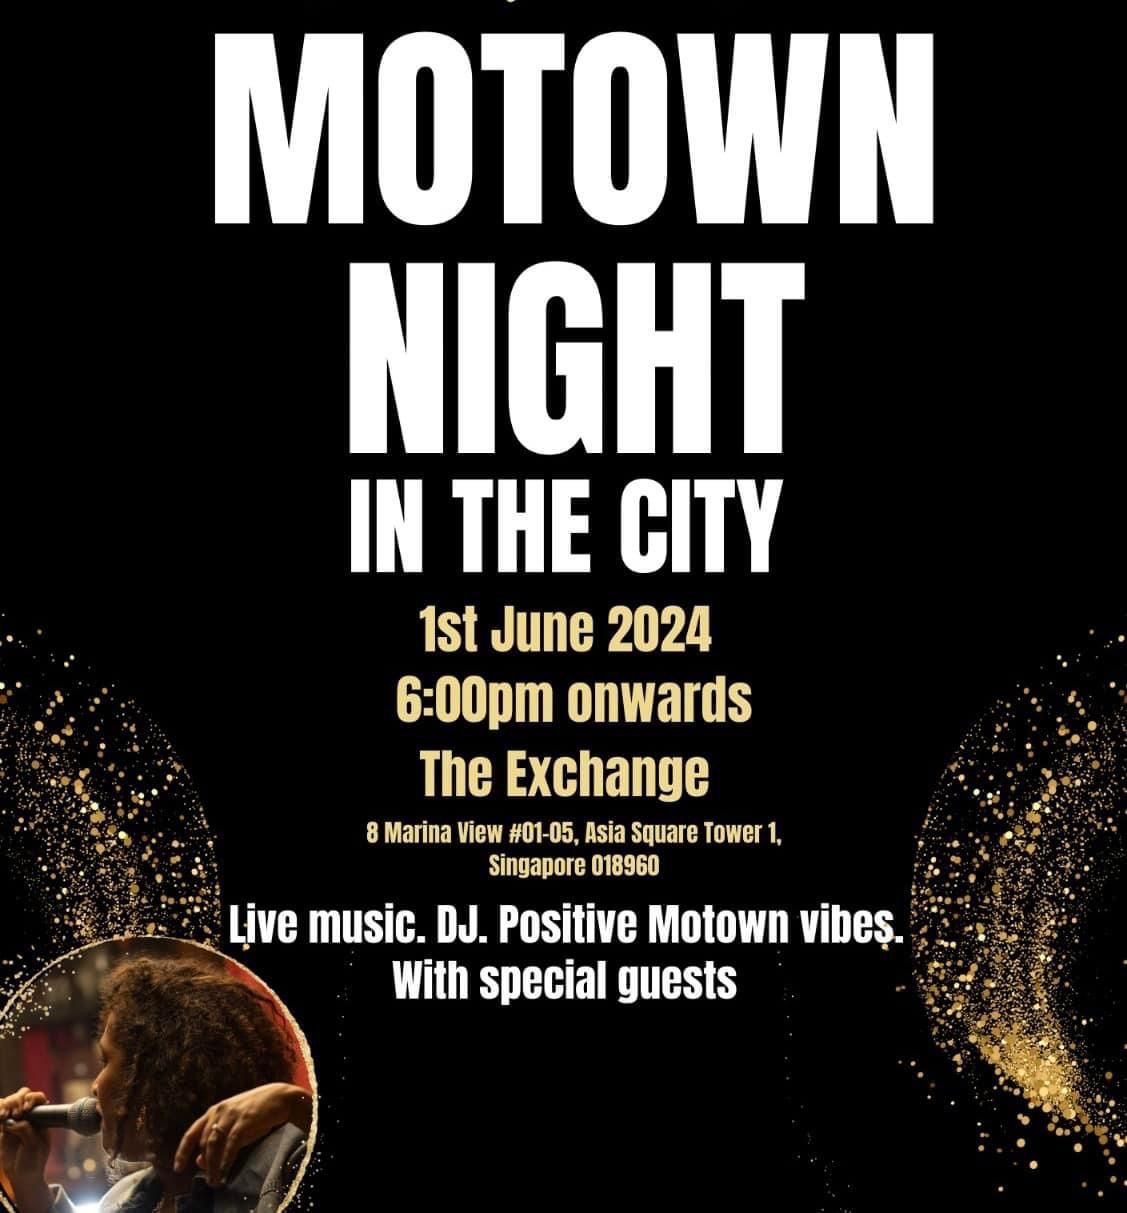 Motown Night in the City 